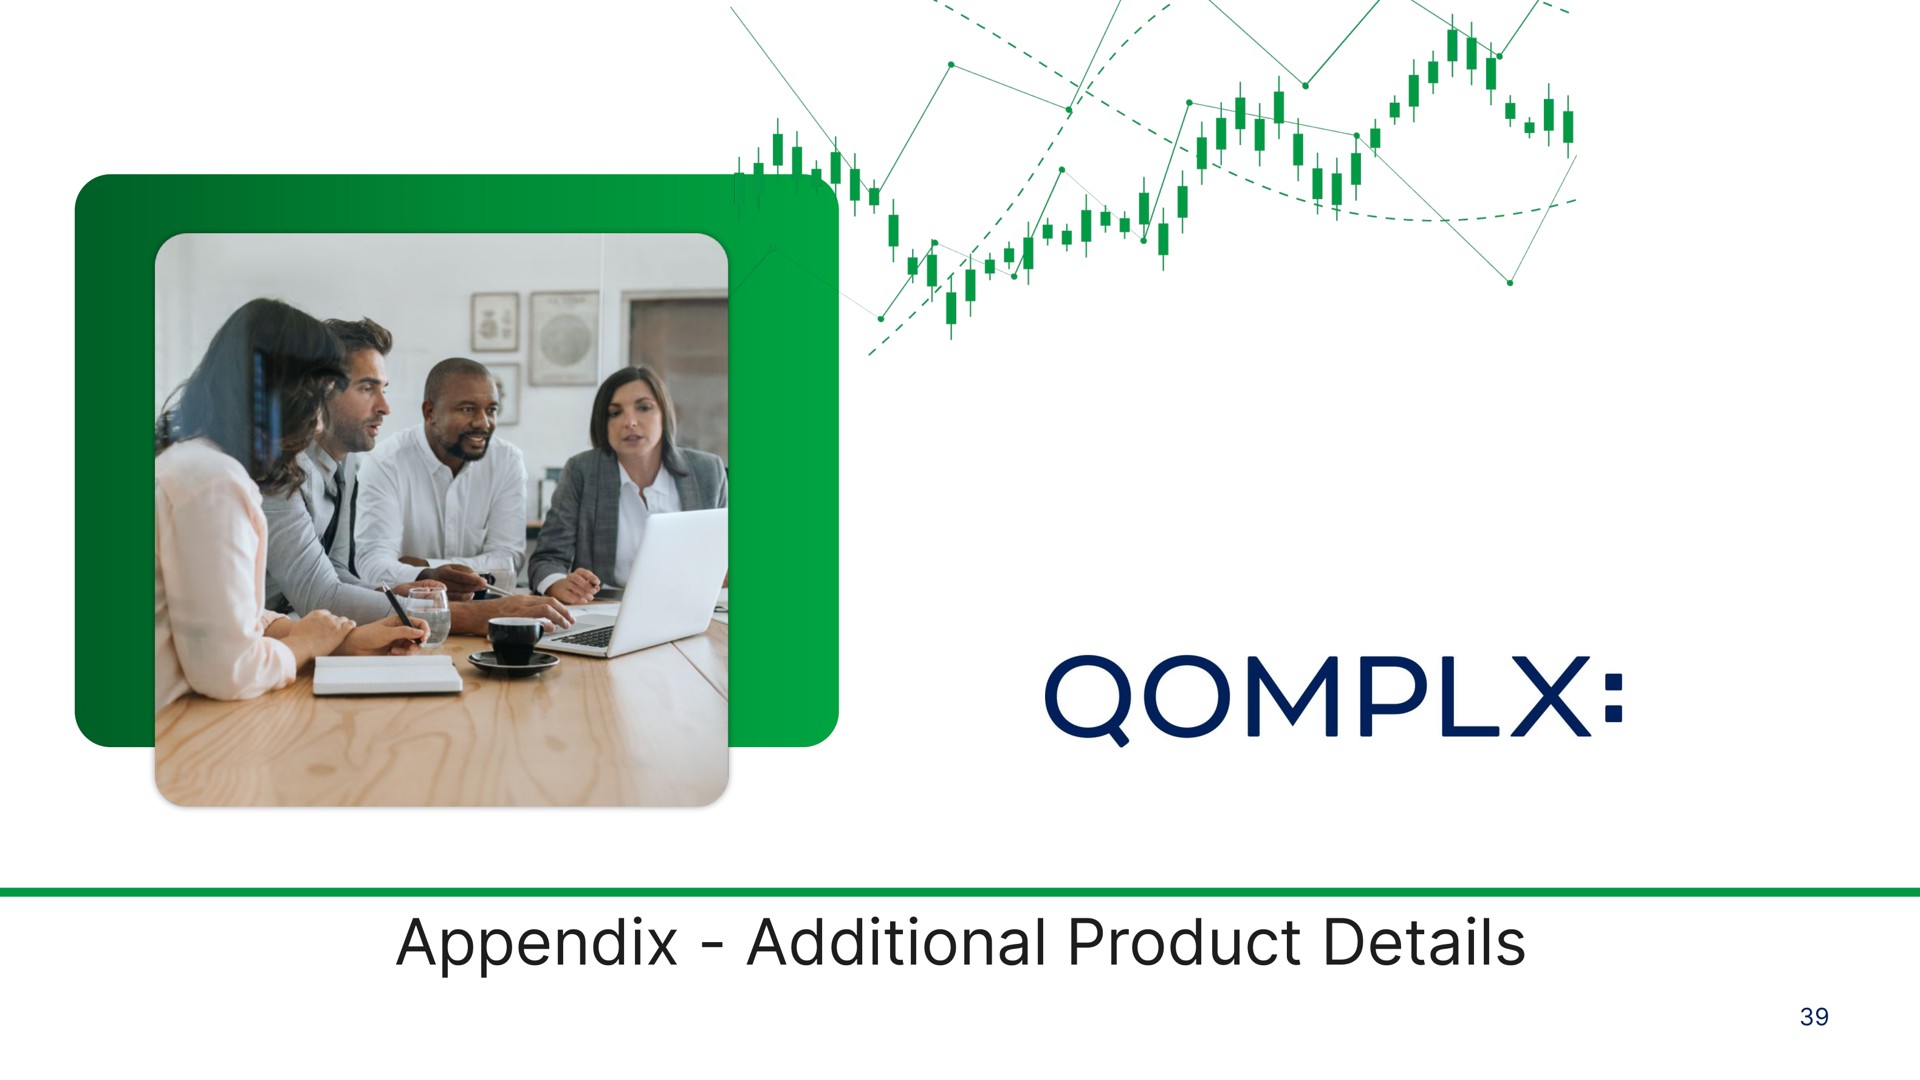 appendix additional product details | Qomplx